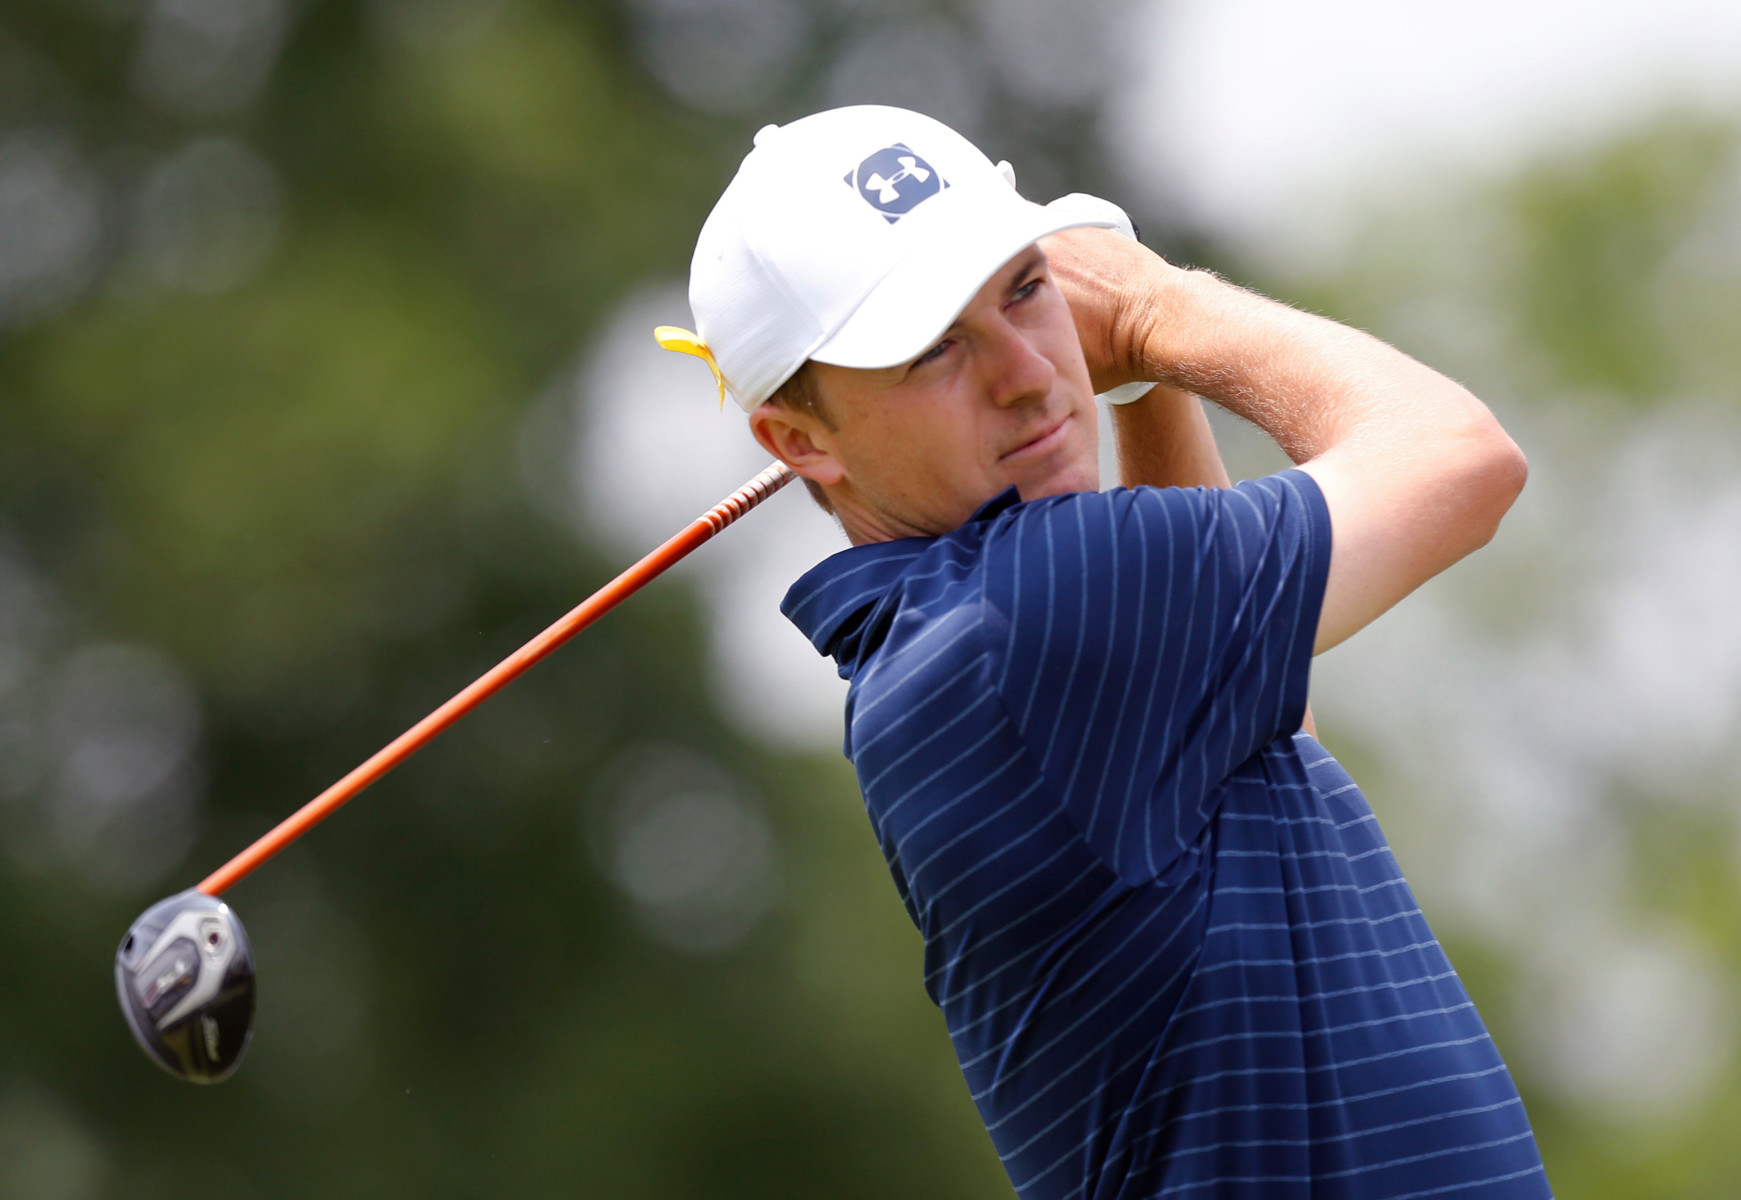 , Jordan Spieth and PGA Tour pros to play tournament this week in dry-run of June golf return after coronavirus lockdown